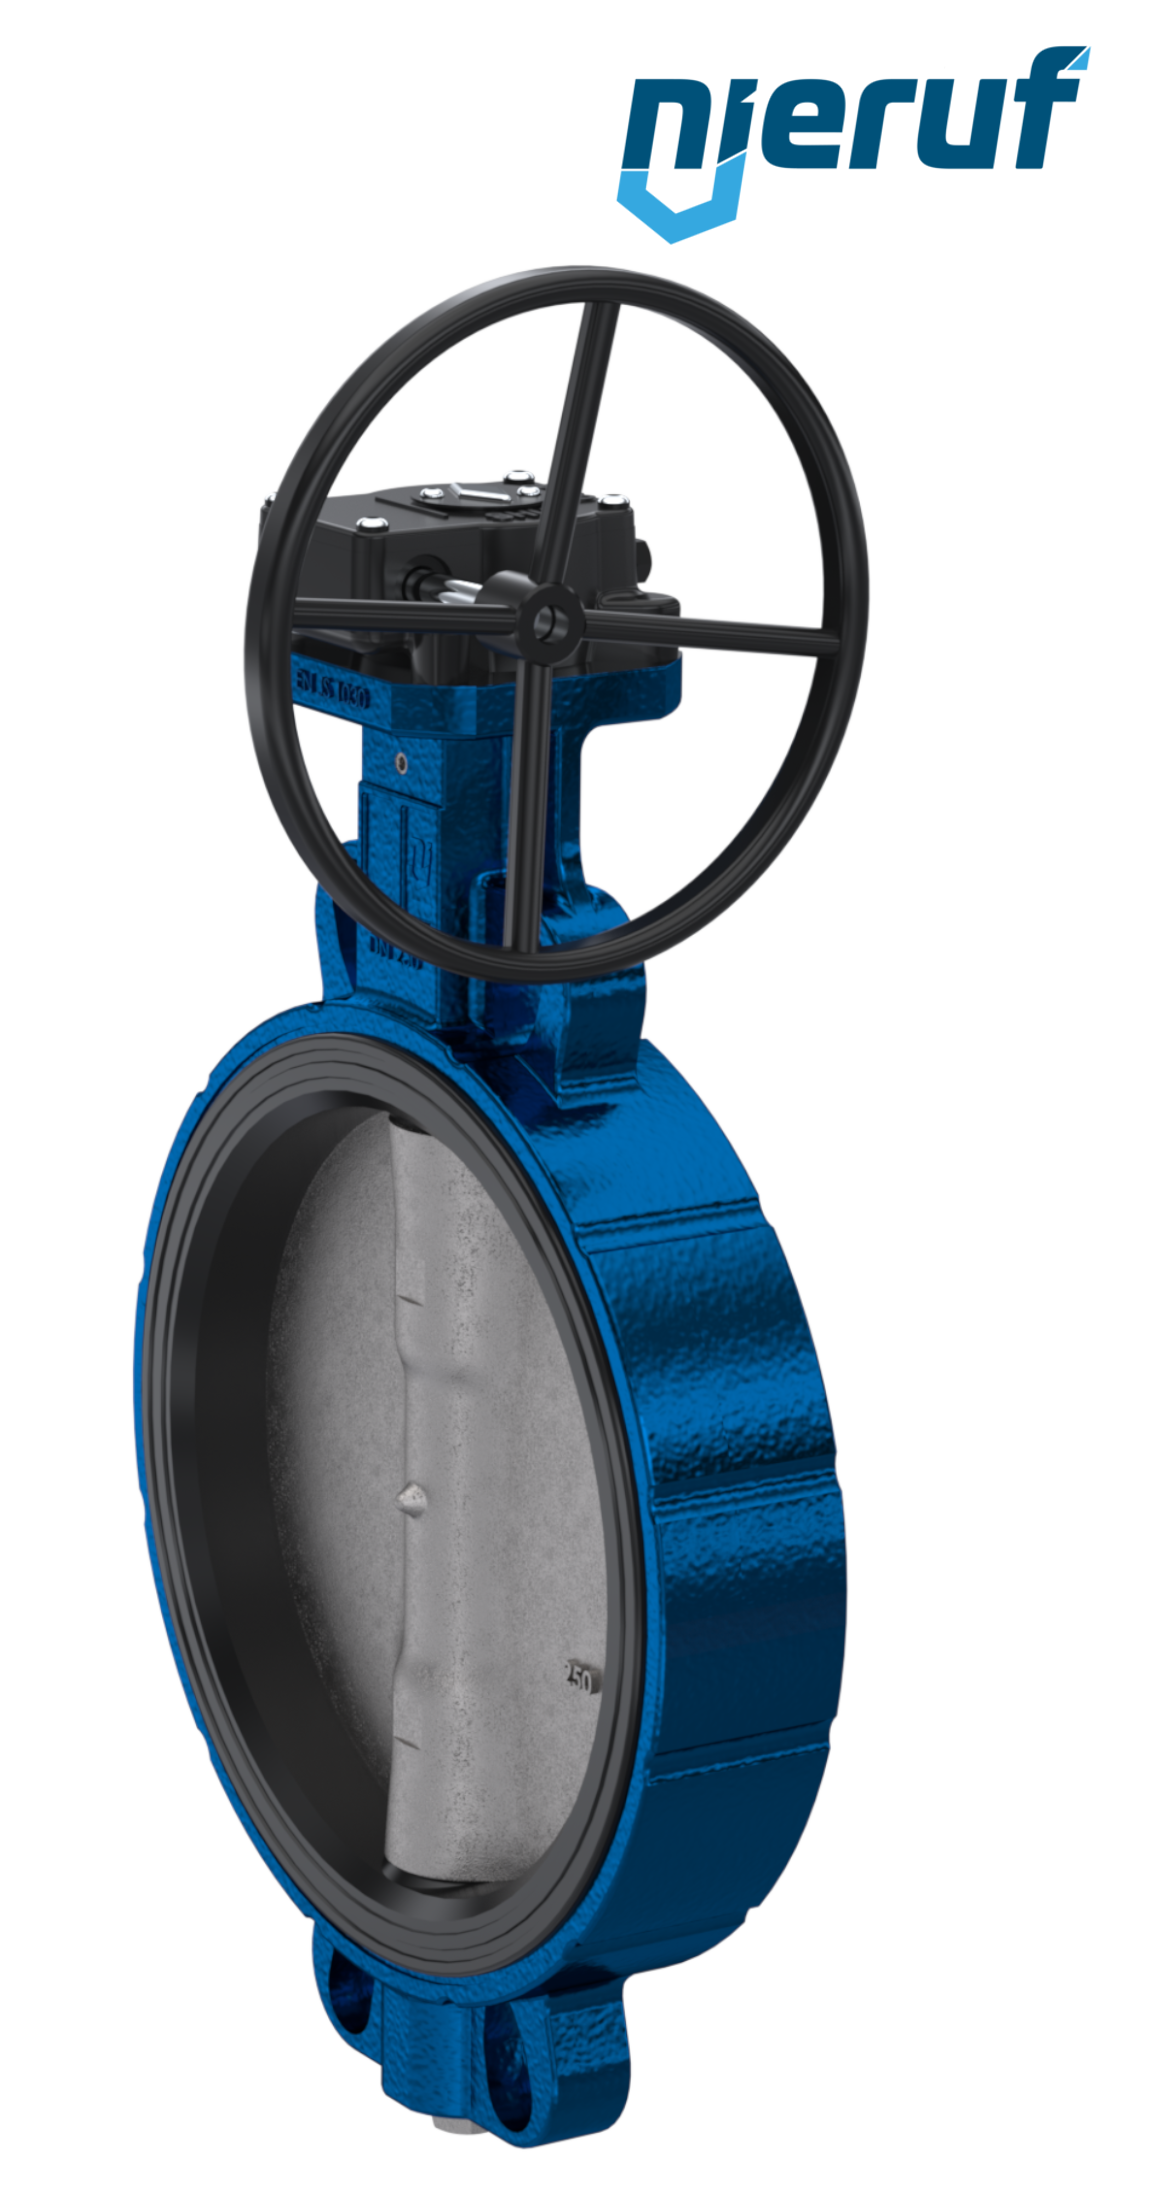 Butterfly valve AK01 DN 250 PN6-PN10-PN16 & ANSI150 DVGW-gas Worm gear